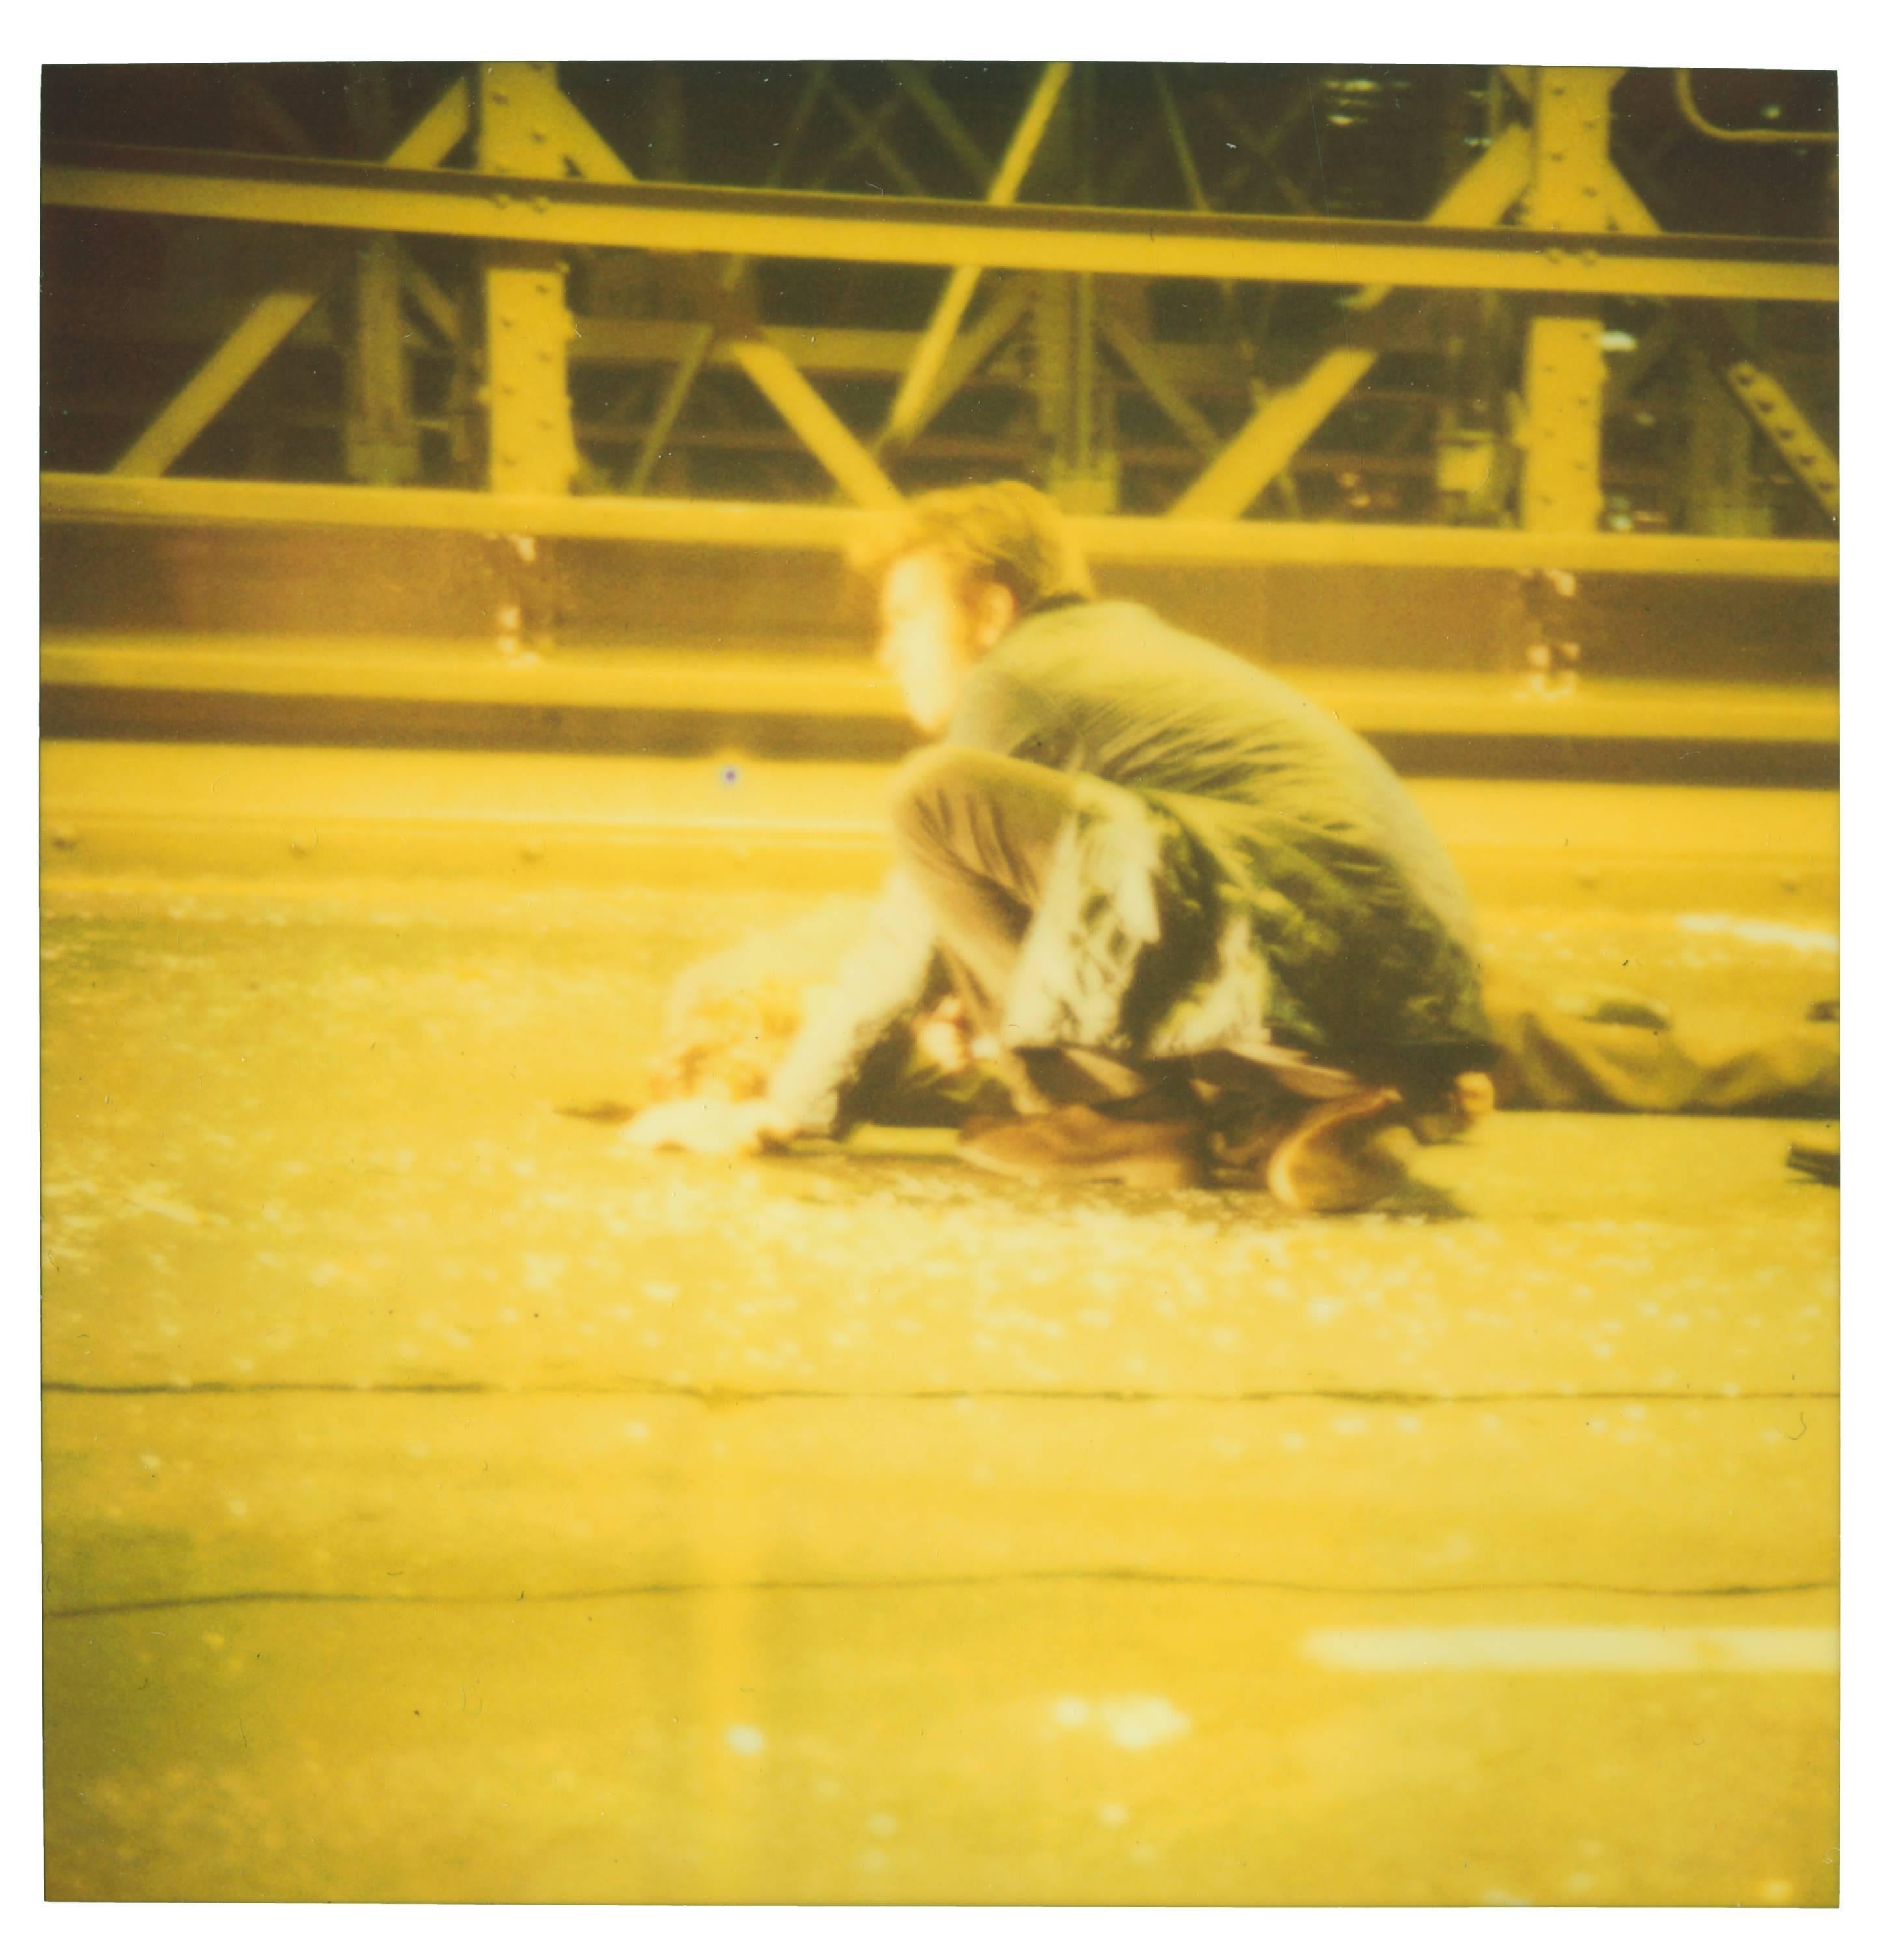 Accident II - with Ewan McGregor and Ryan Gosling, Polaroid, 21st Century, Color